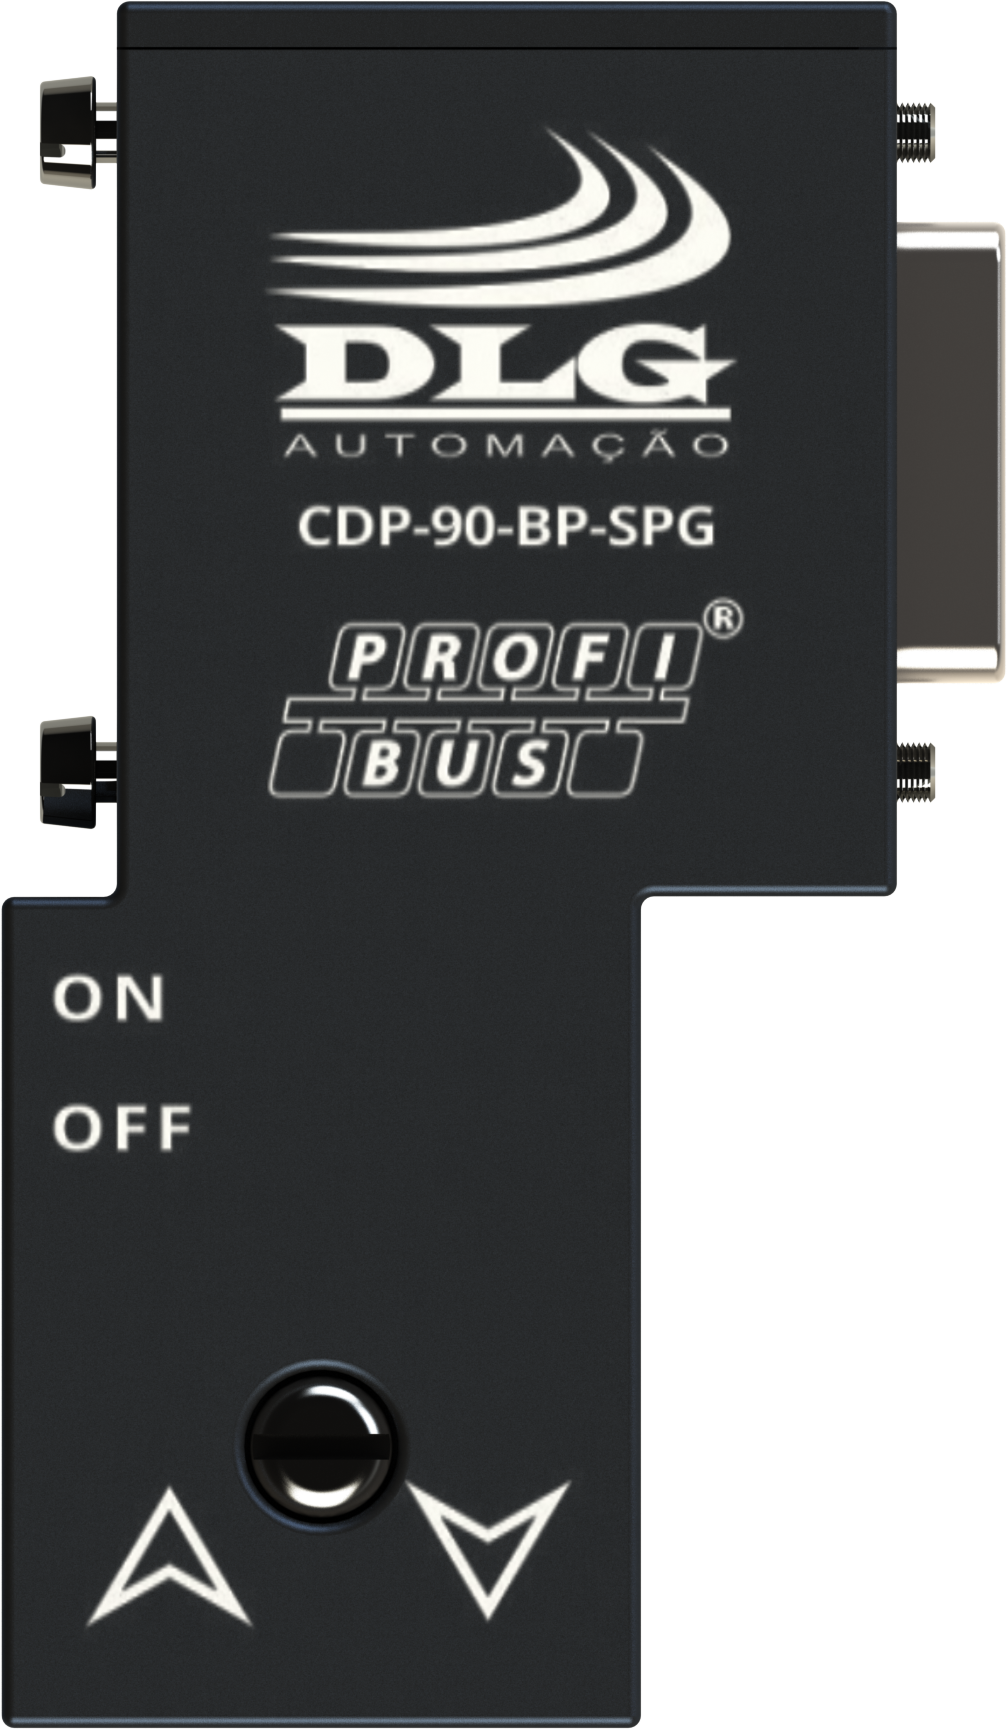 CDP-90-BP-SPG - Conector Profibus DP Metálico sem Pig Back